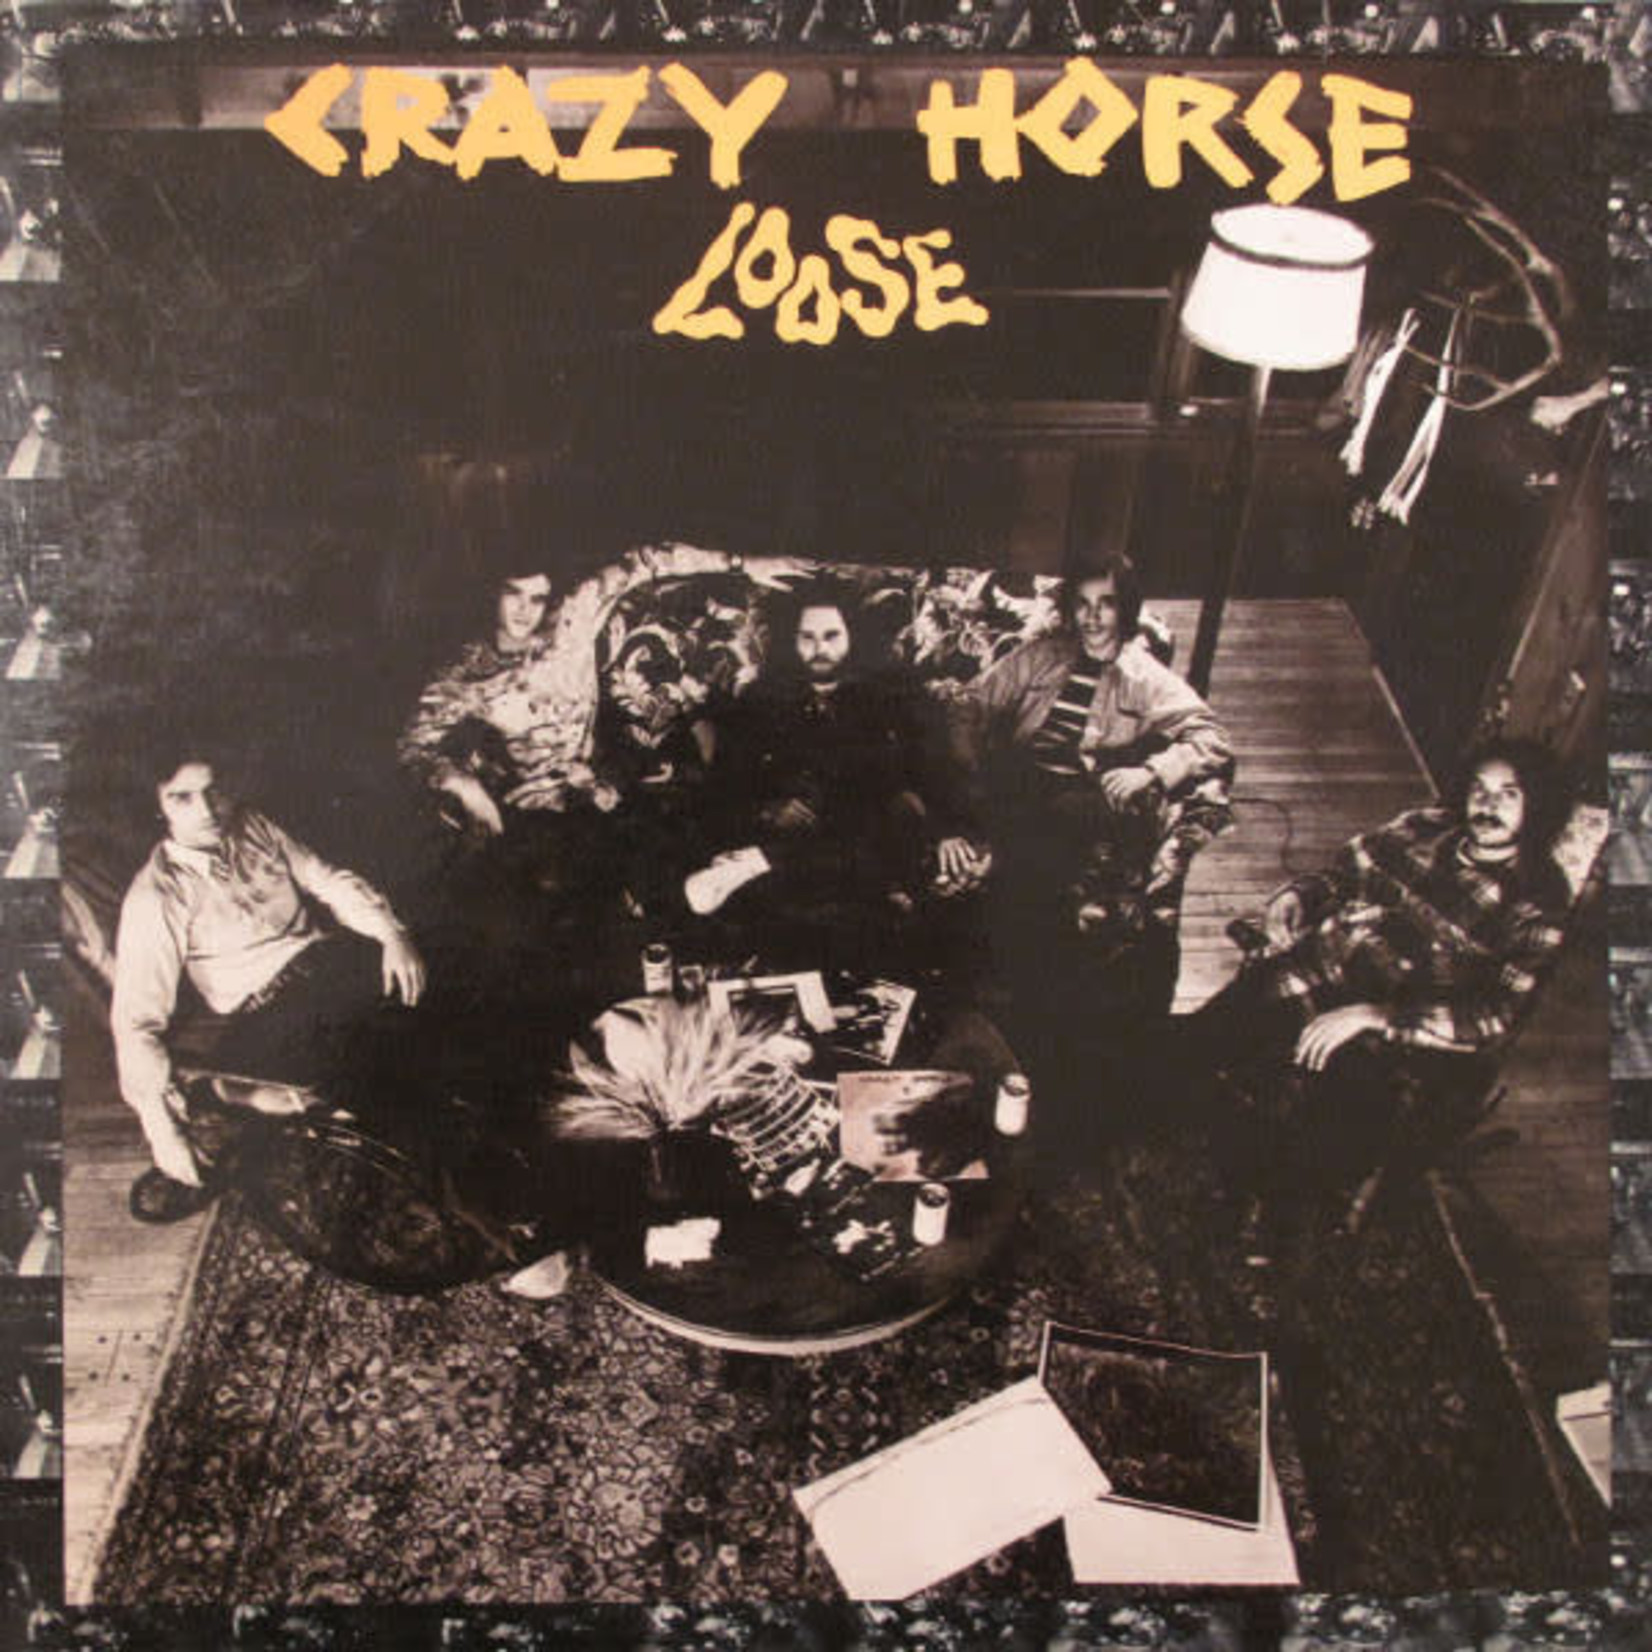 [Vintage] Crazy Horse - Loose